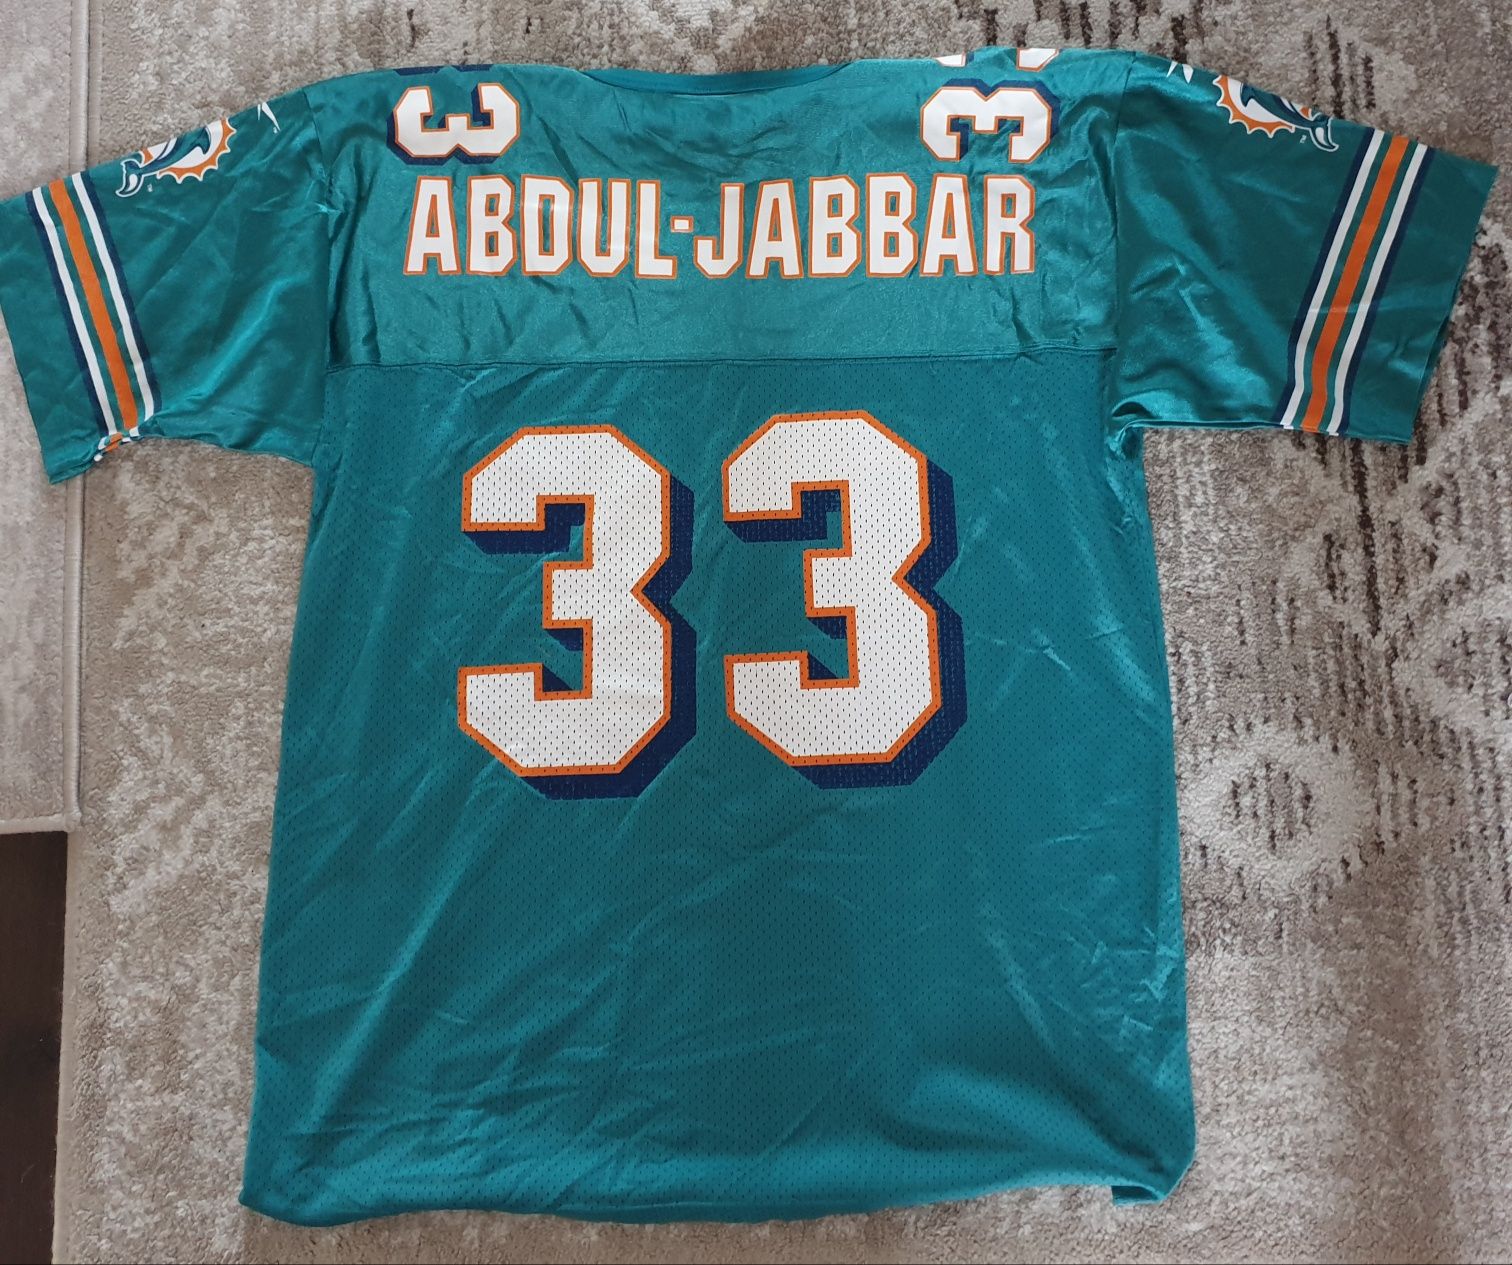 Tricou Miami Dolphins - Abdul Jabbar 33